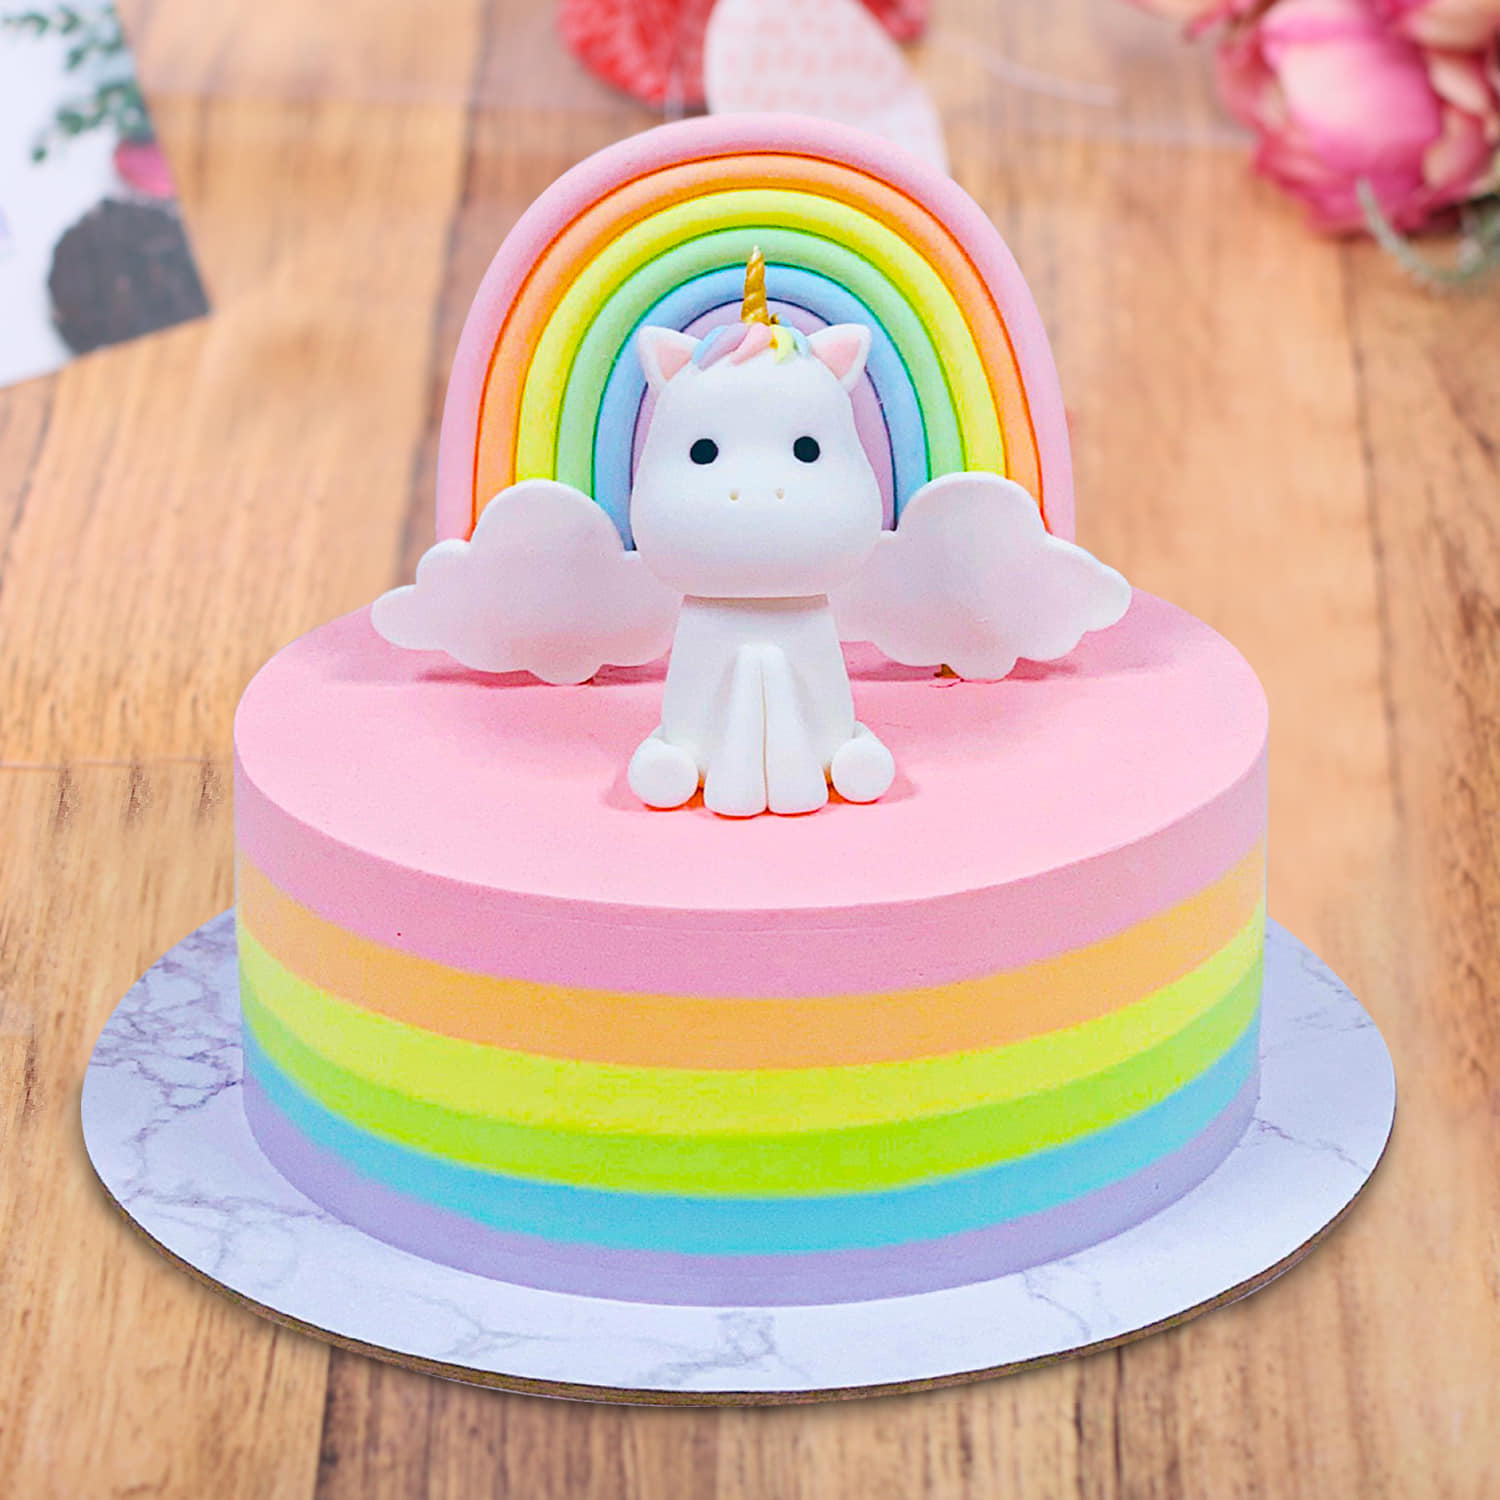 Rainbow Theme Cake by Creme Castle